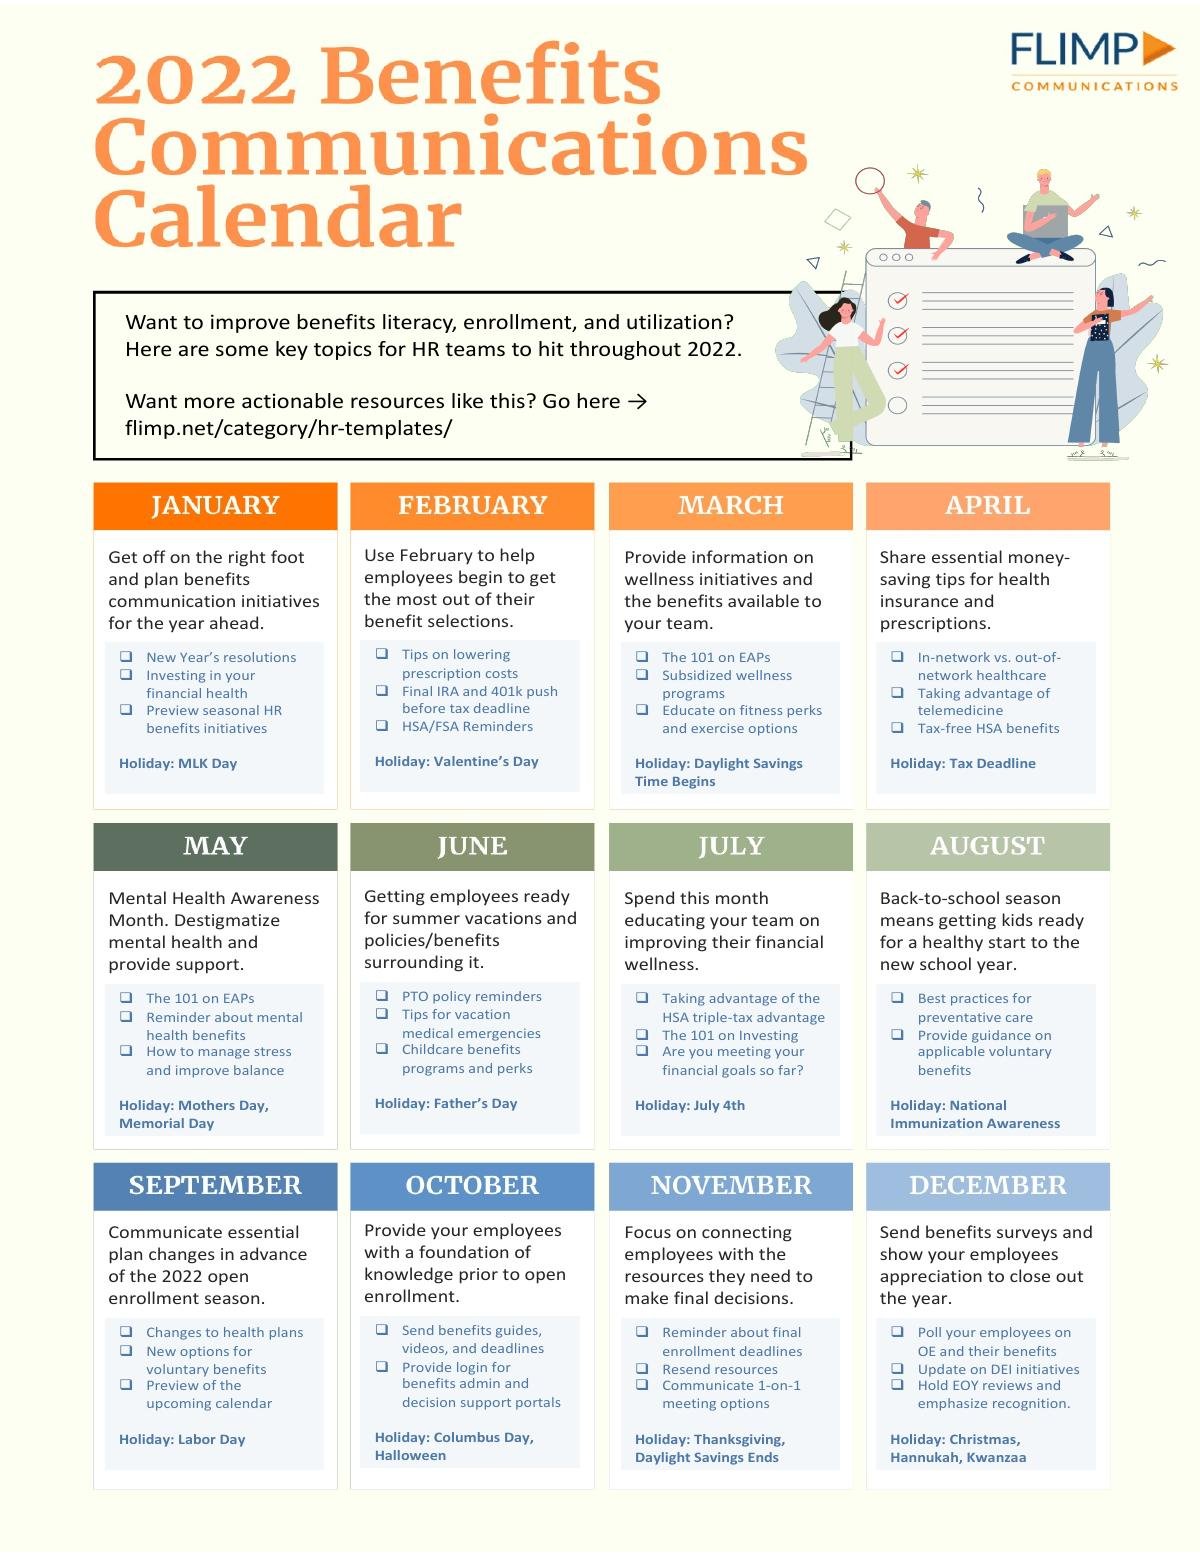 2022 Benefits Communications Calendar